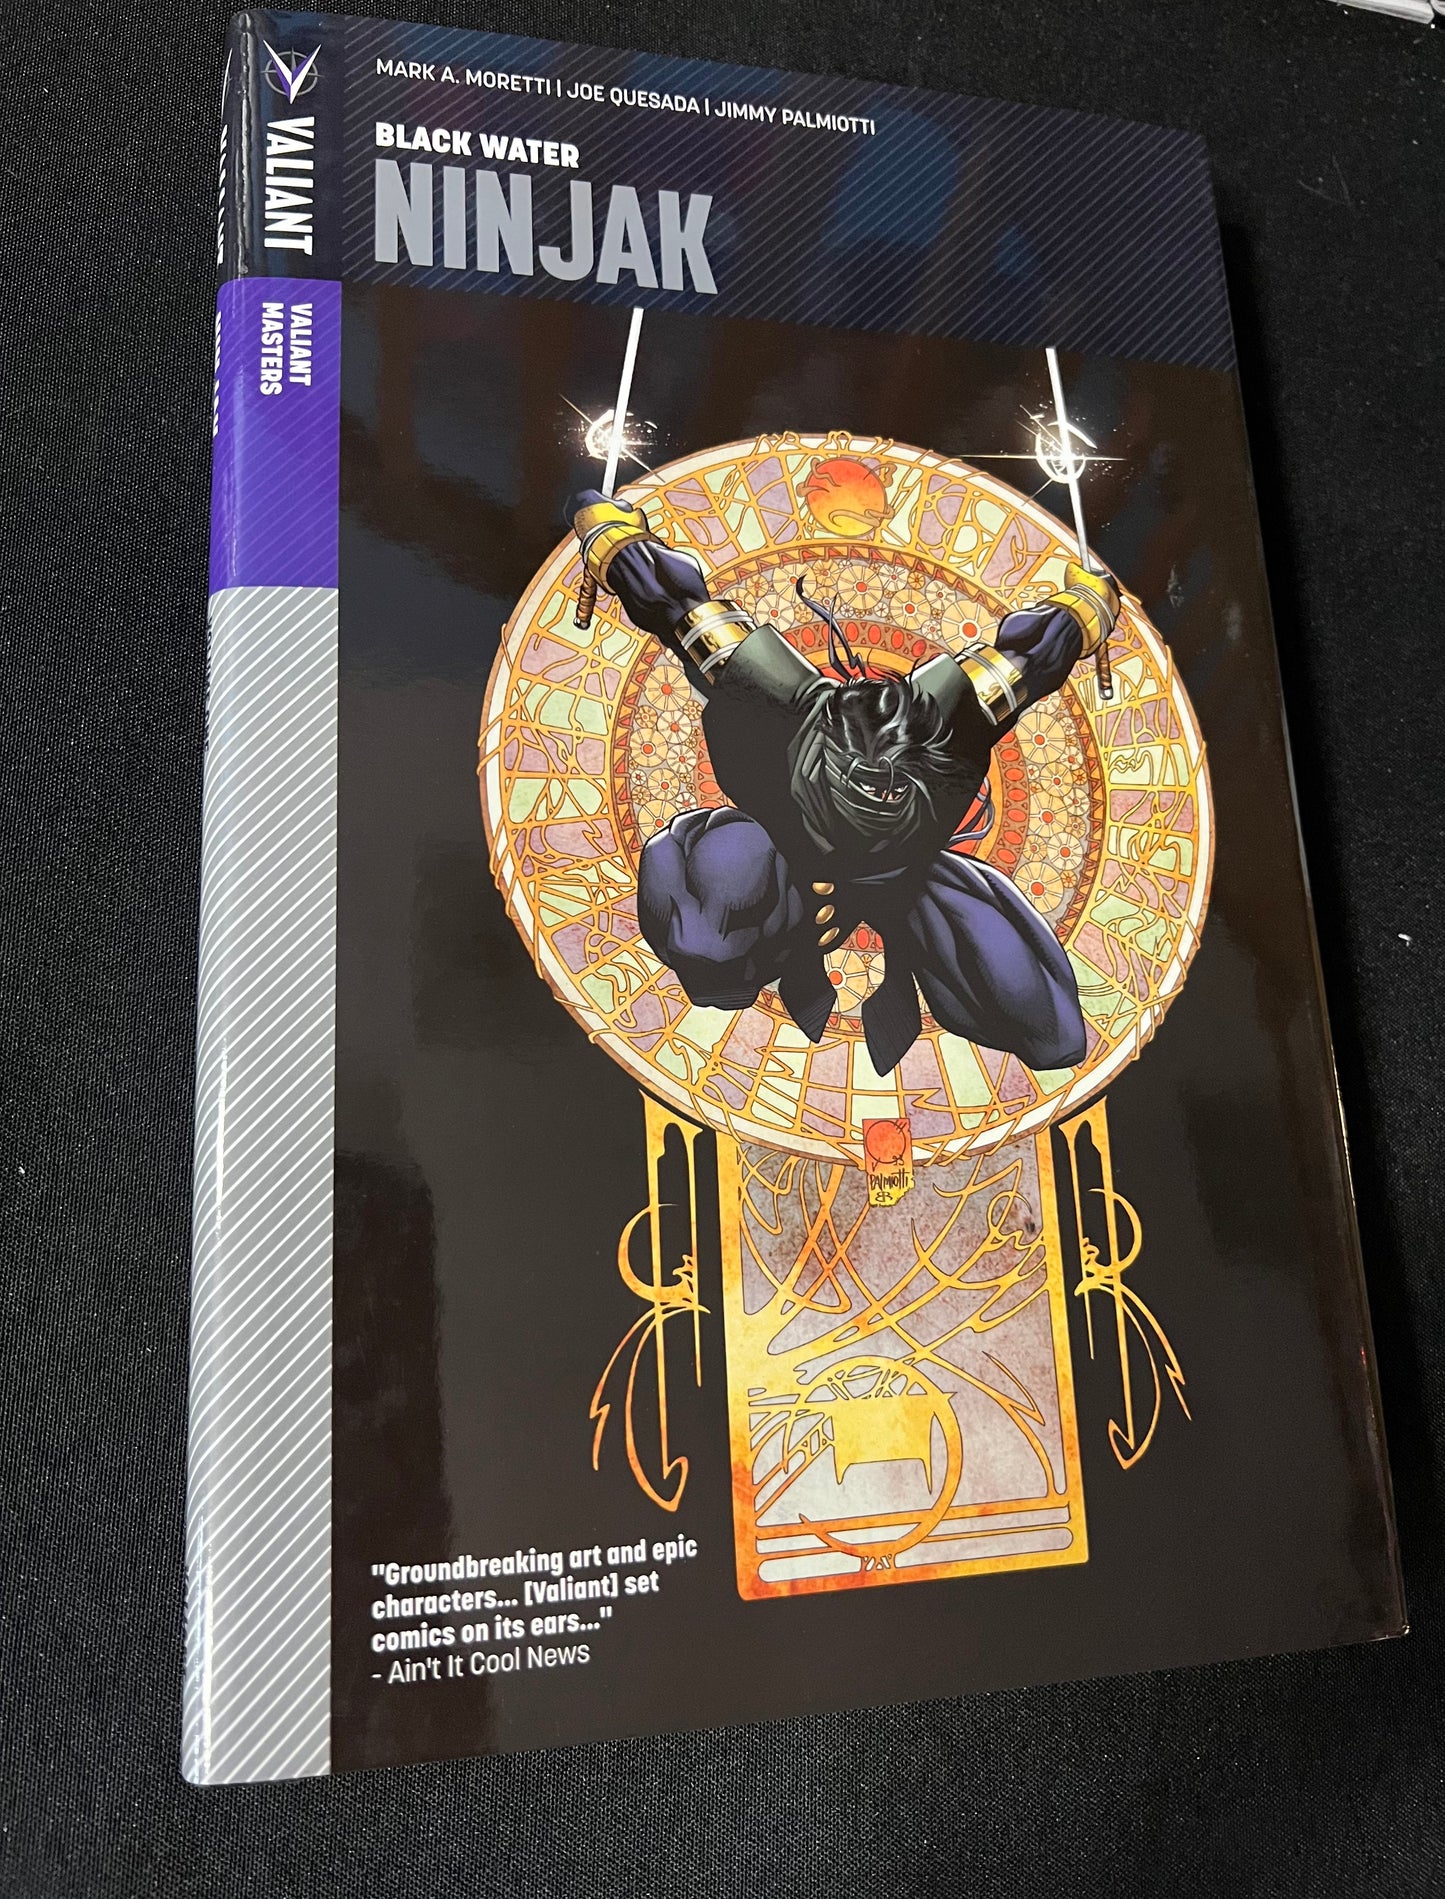 Valiant Masters x6 Hardcover Graphic Novel Collection (Shadowman, Bloodshot, Rai, Ninjak)